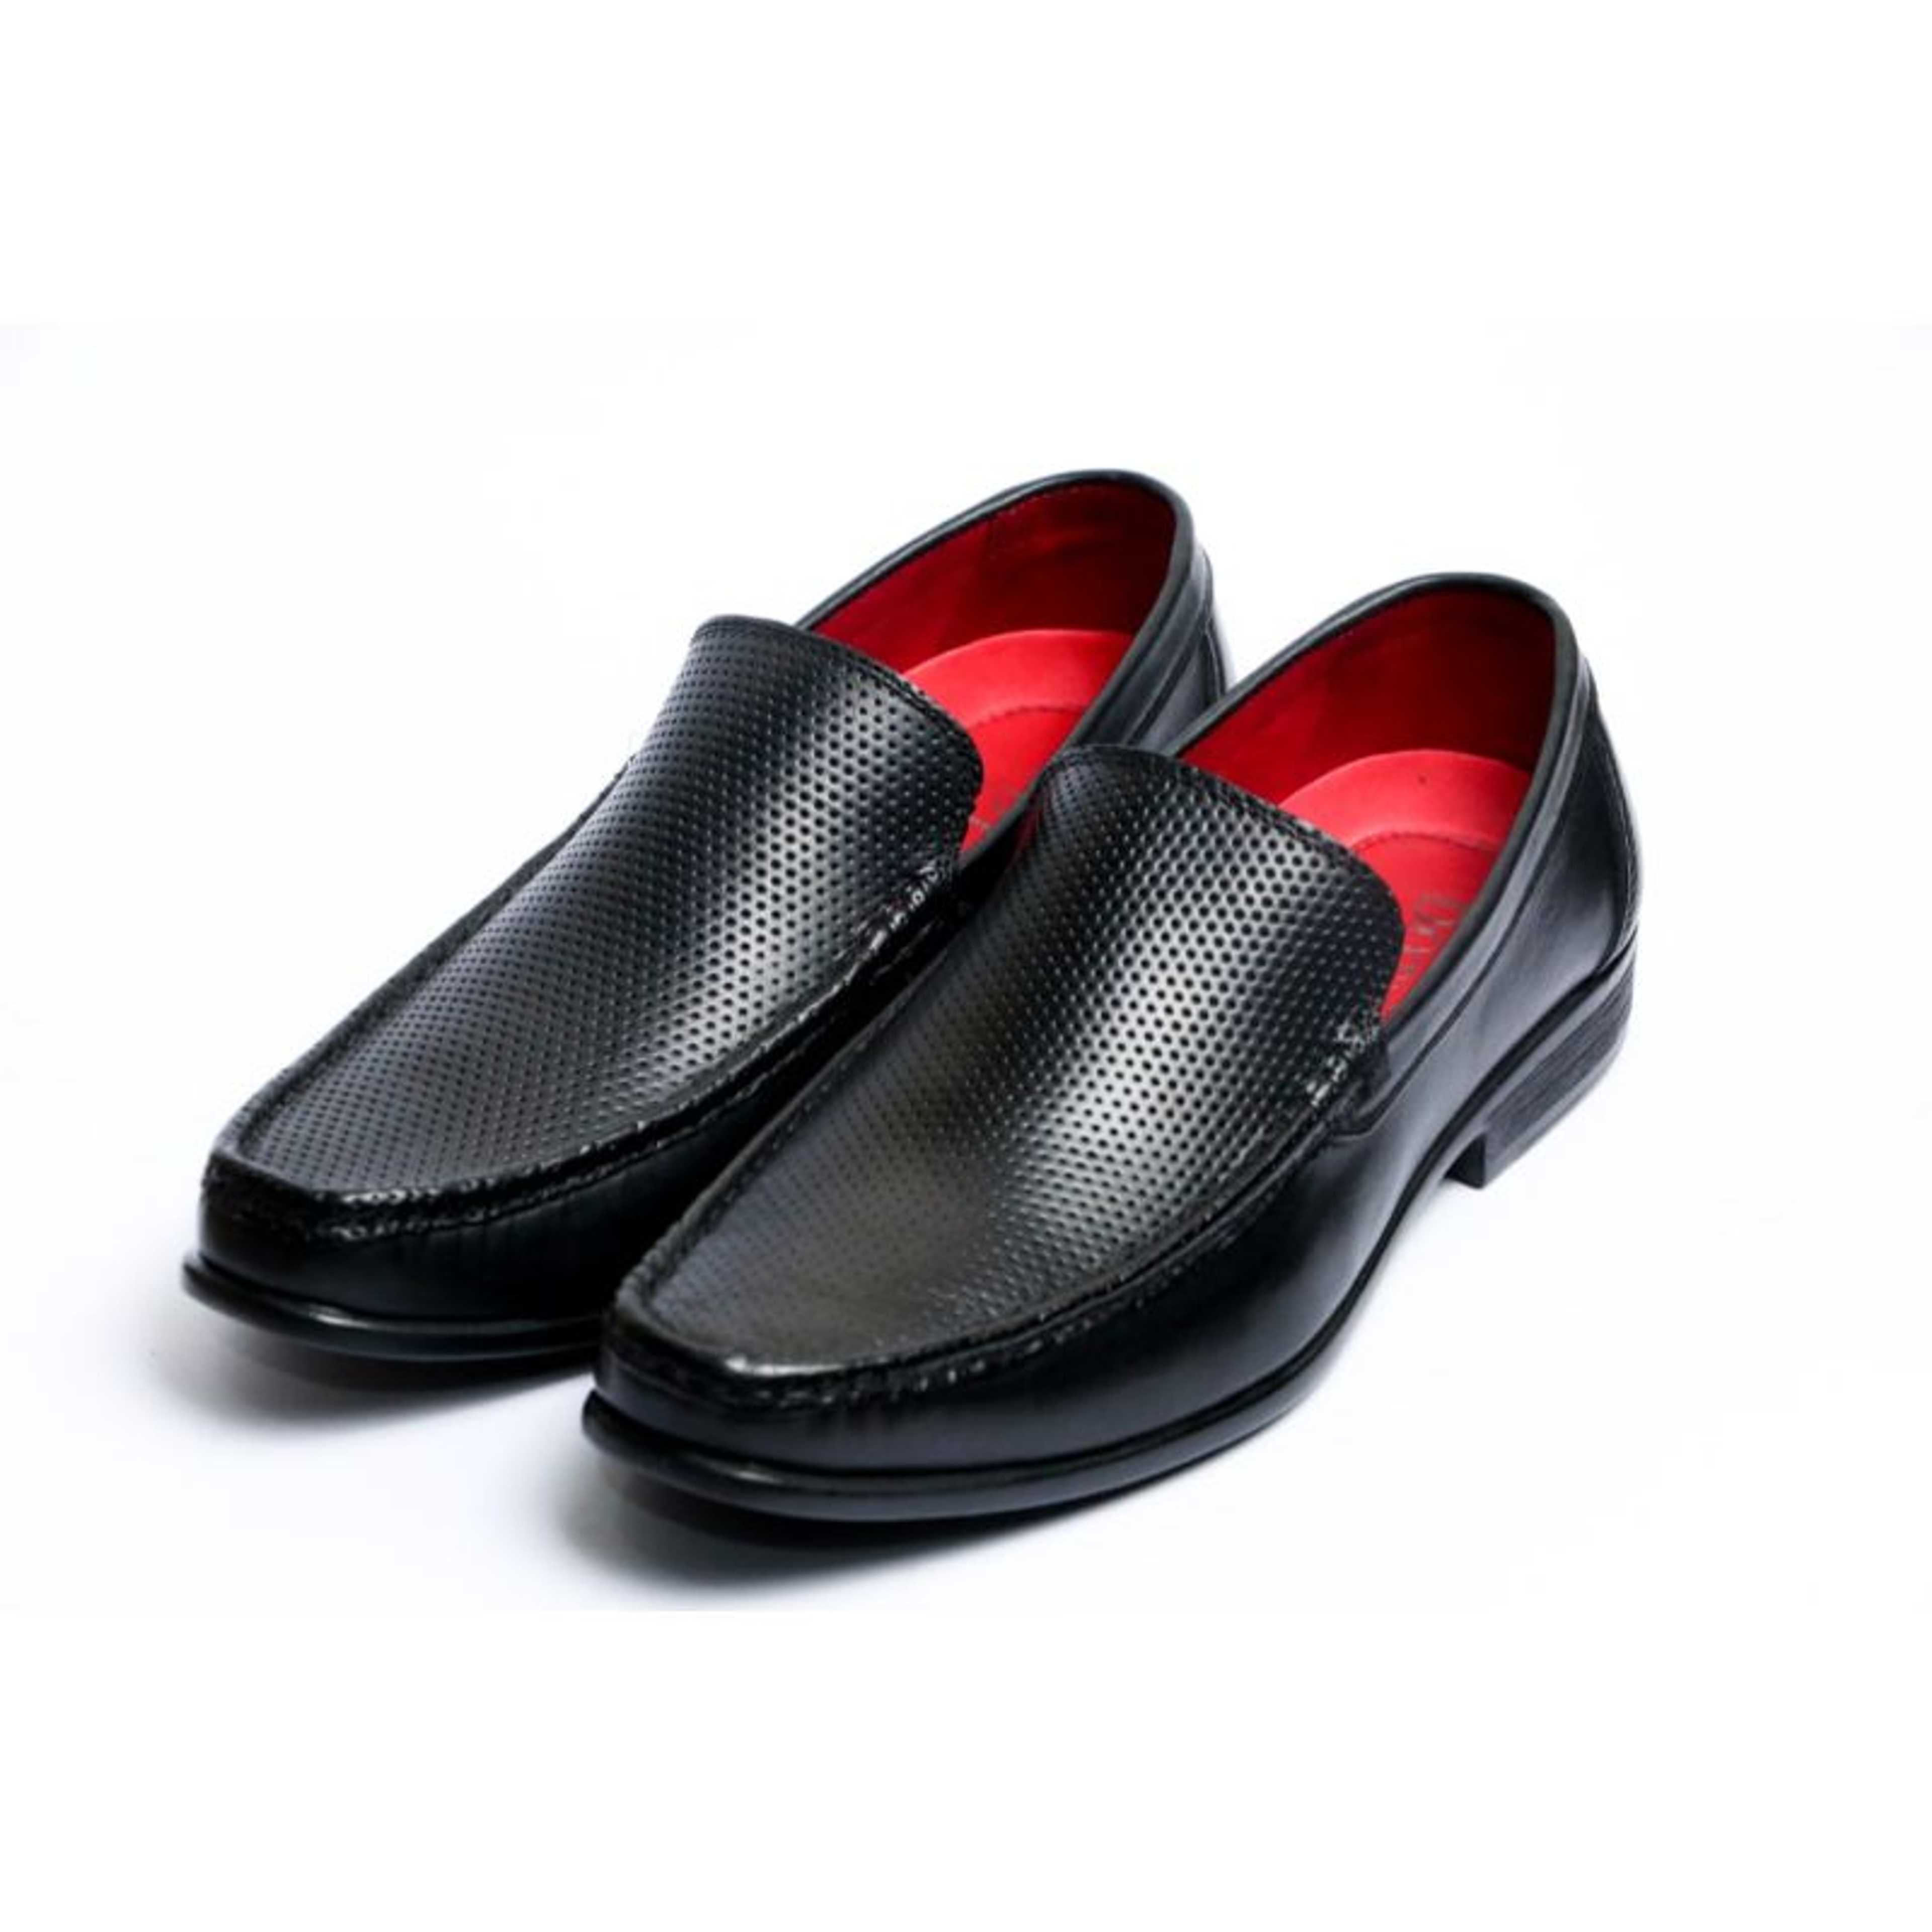 "Black Colour Formal Shoe Uper Leather Sole Rubber"